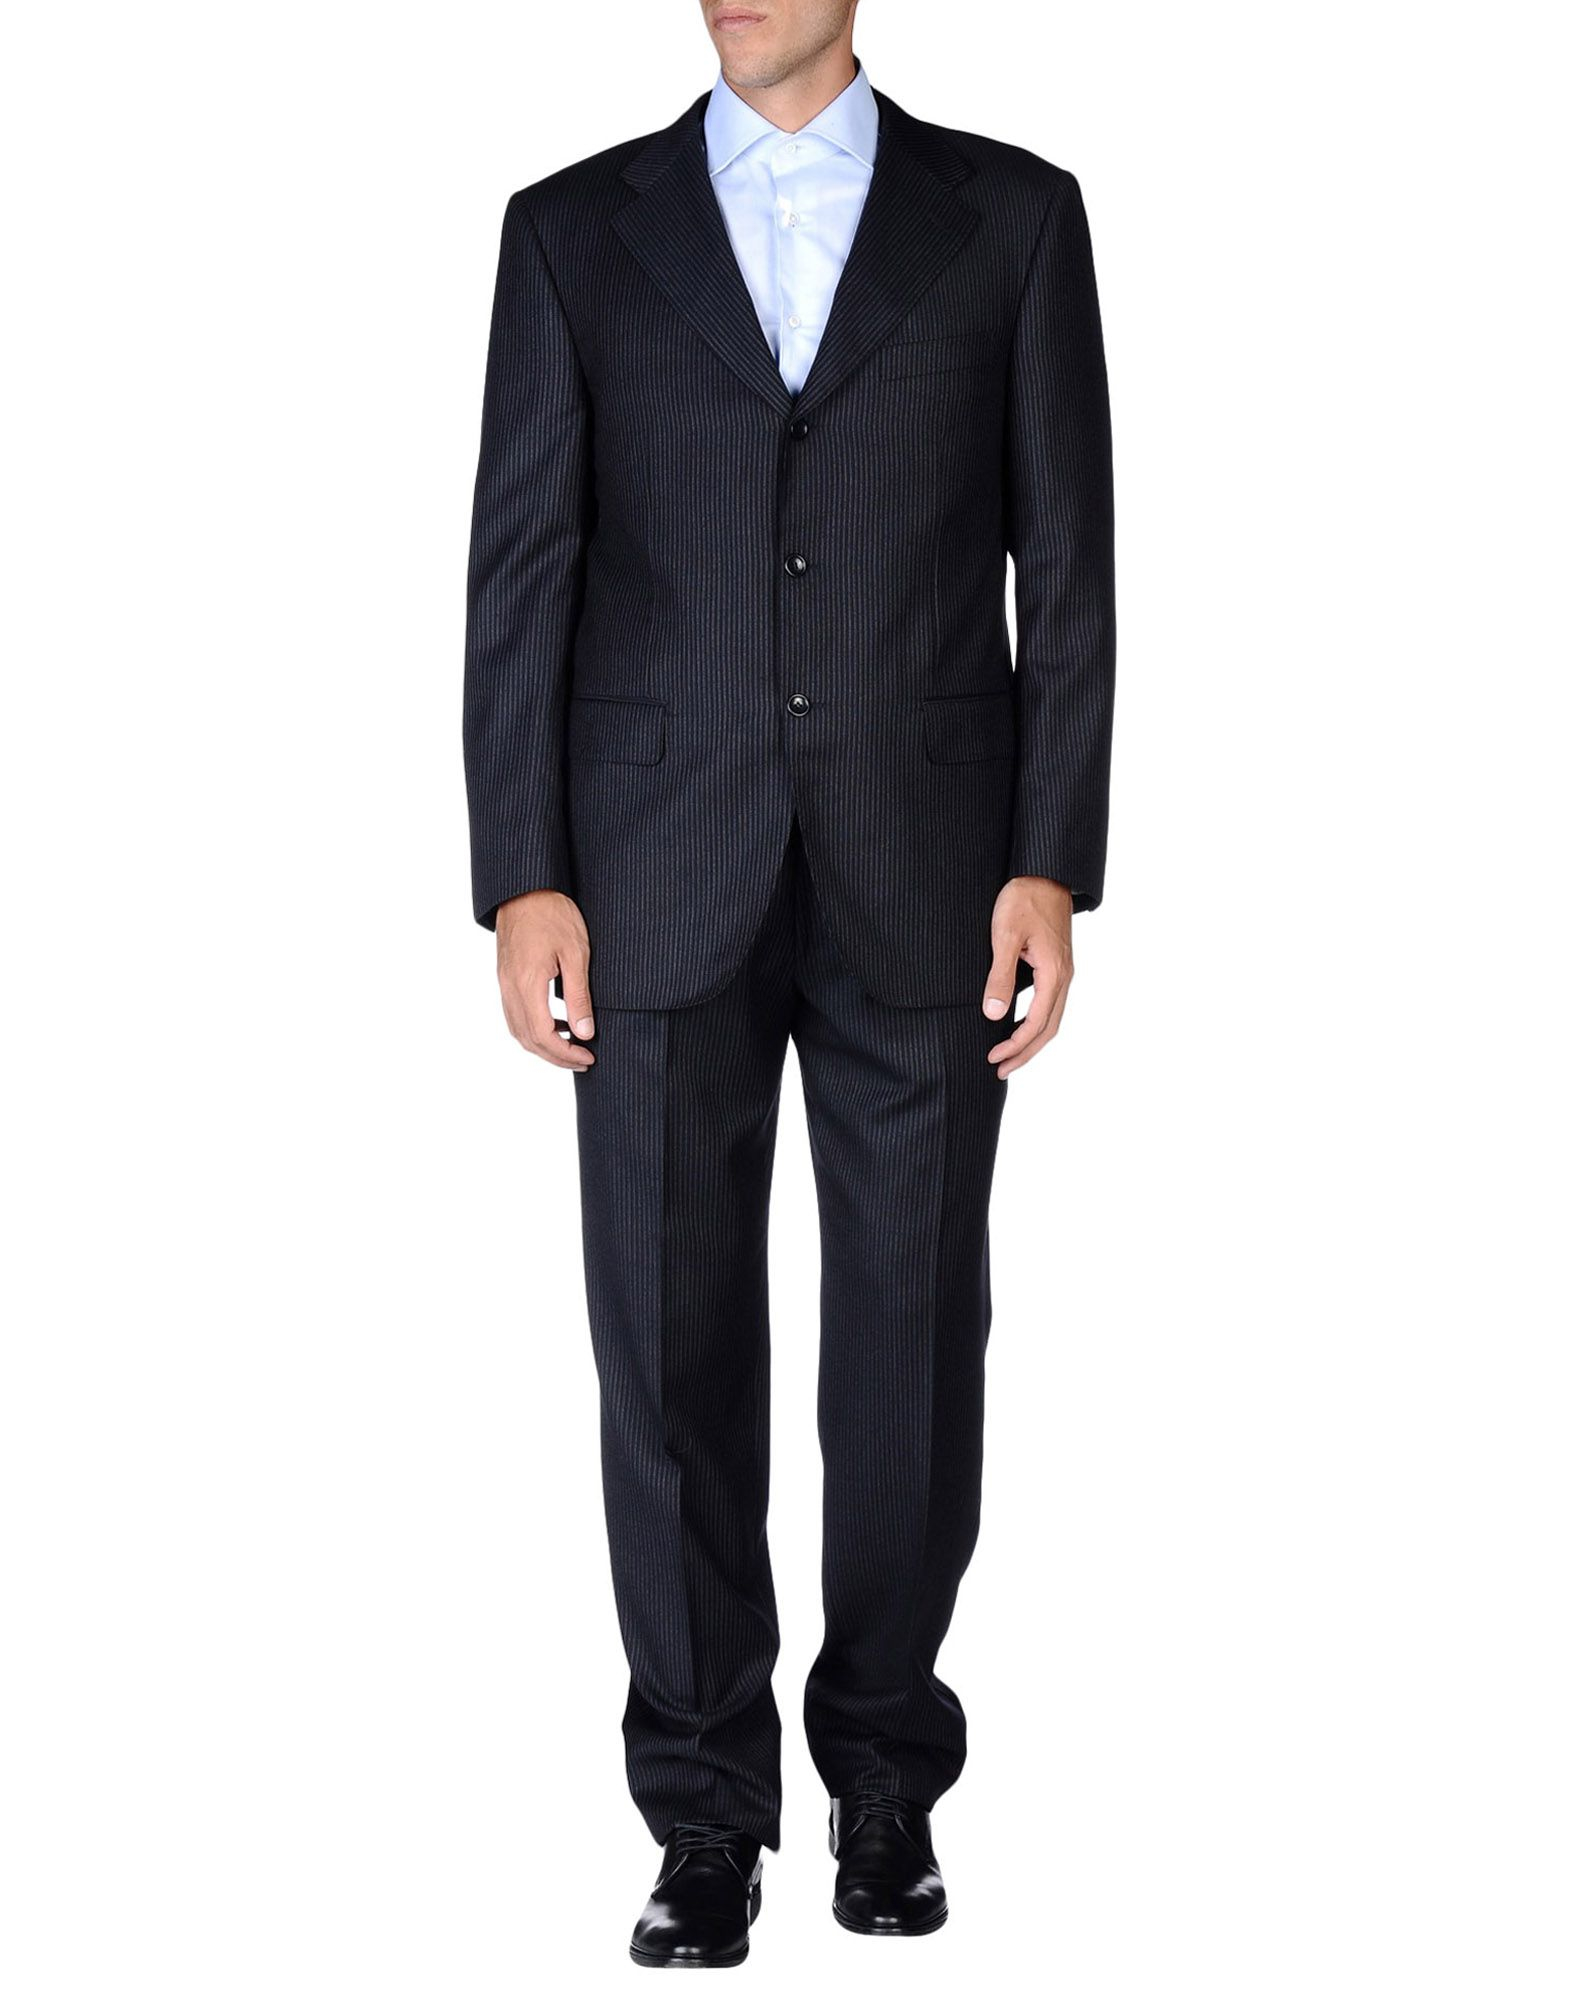 Lyst - Loro Piana Suit in Gray for Men